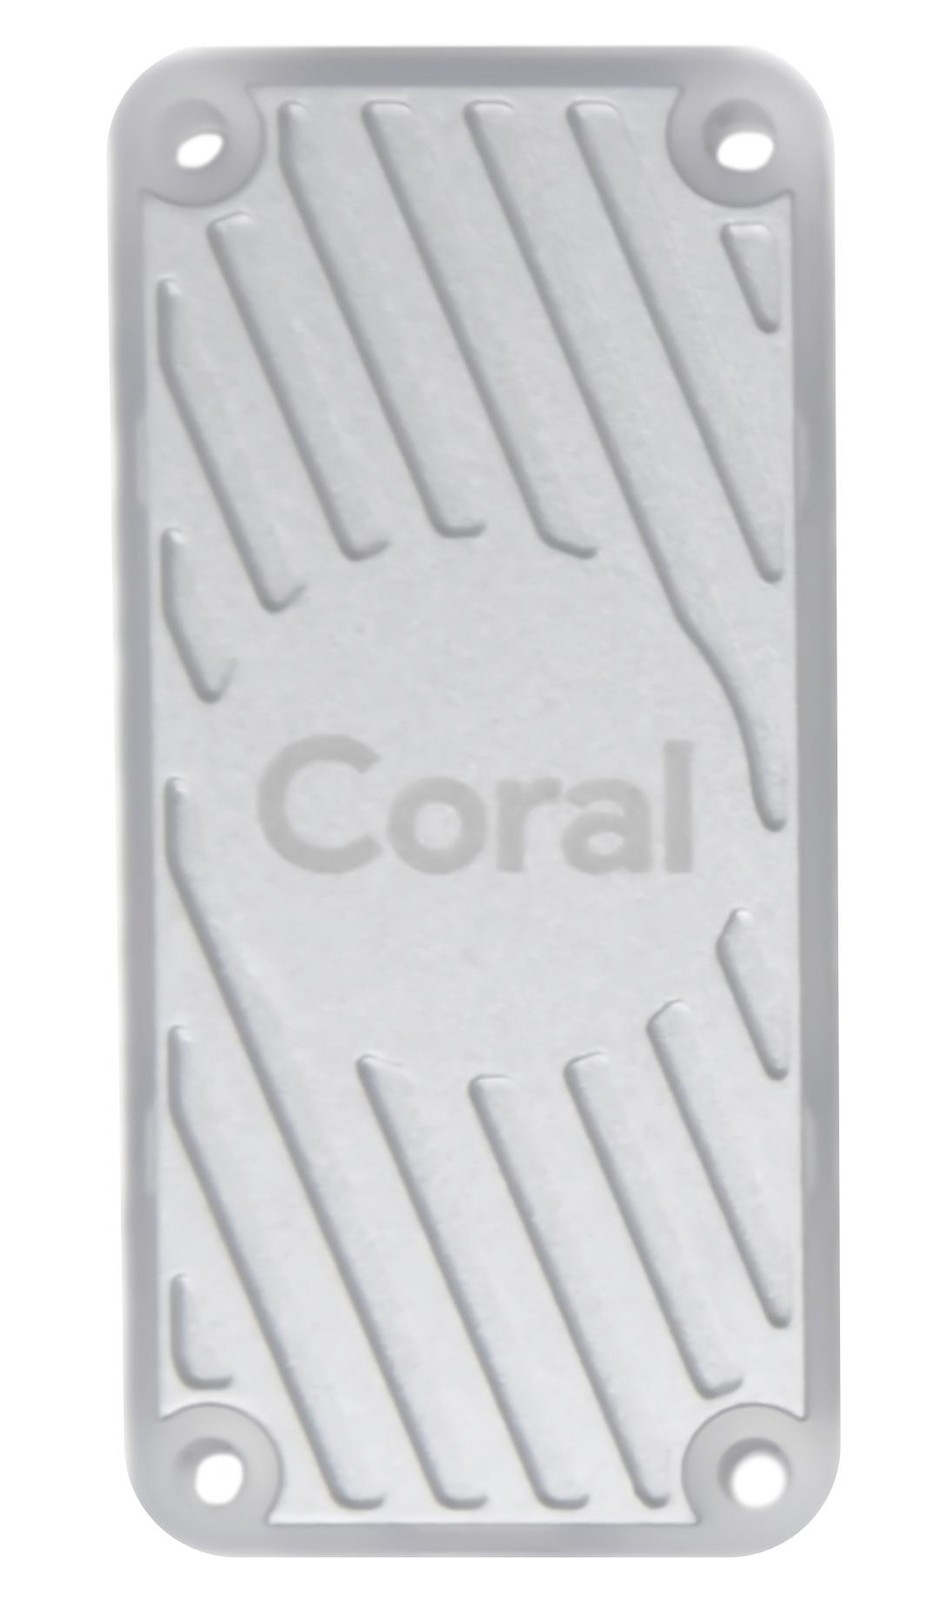 Coral G950-01456-01 Usb Accelerator, Raspberry Pi